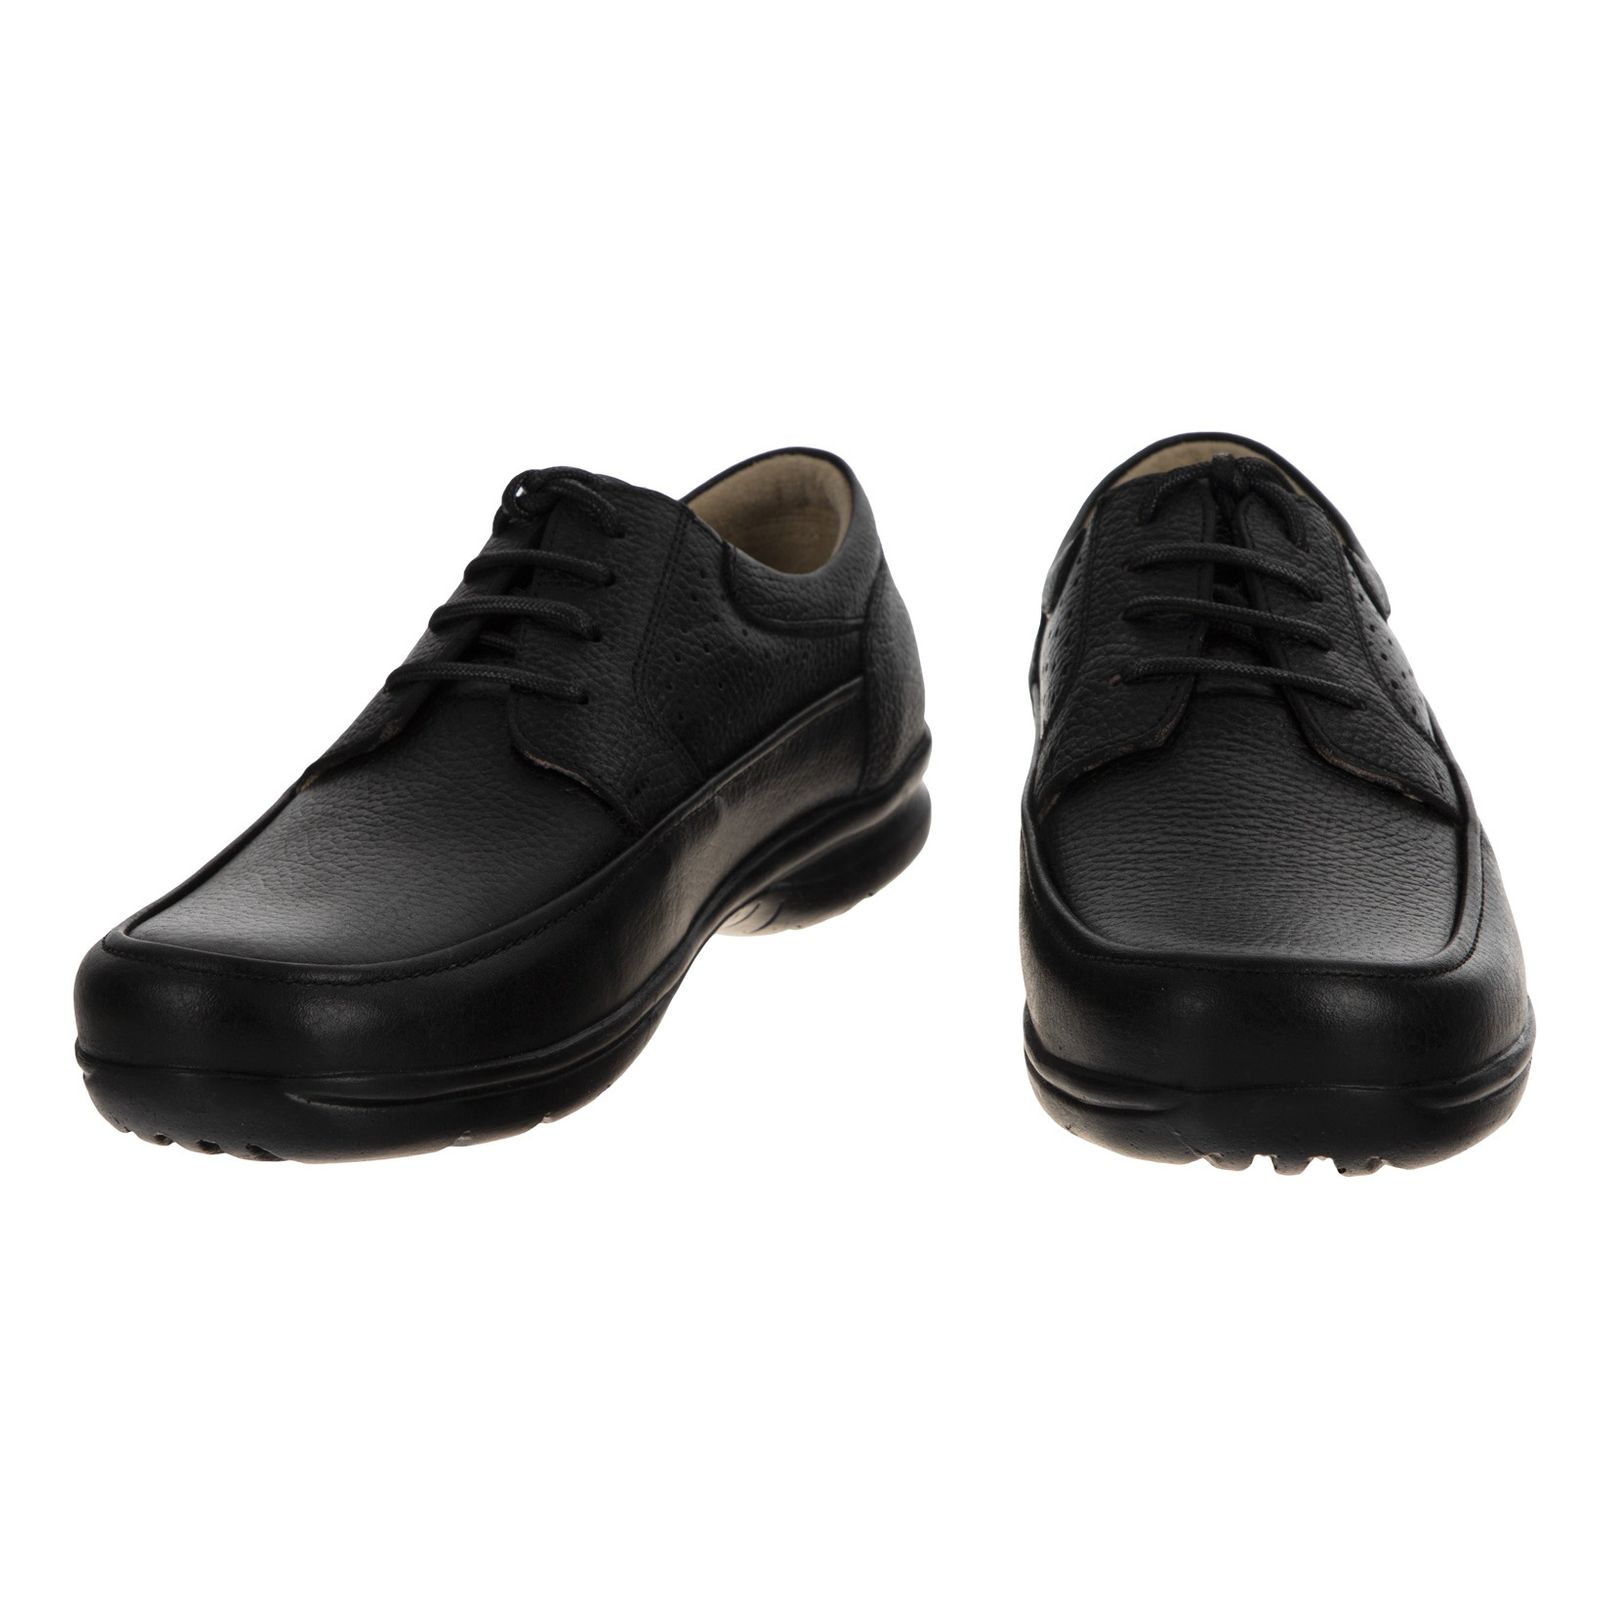 کفش روزمره مردانه دانادل مدل 7715B503101 - مشکی - 5